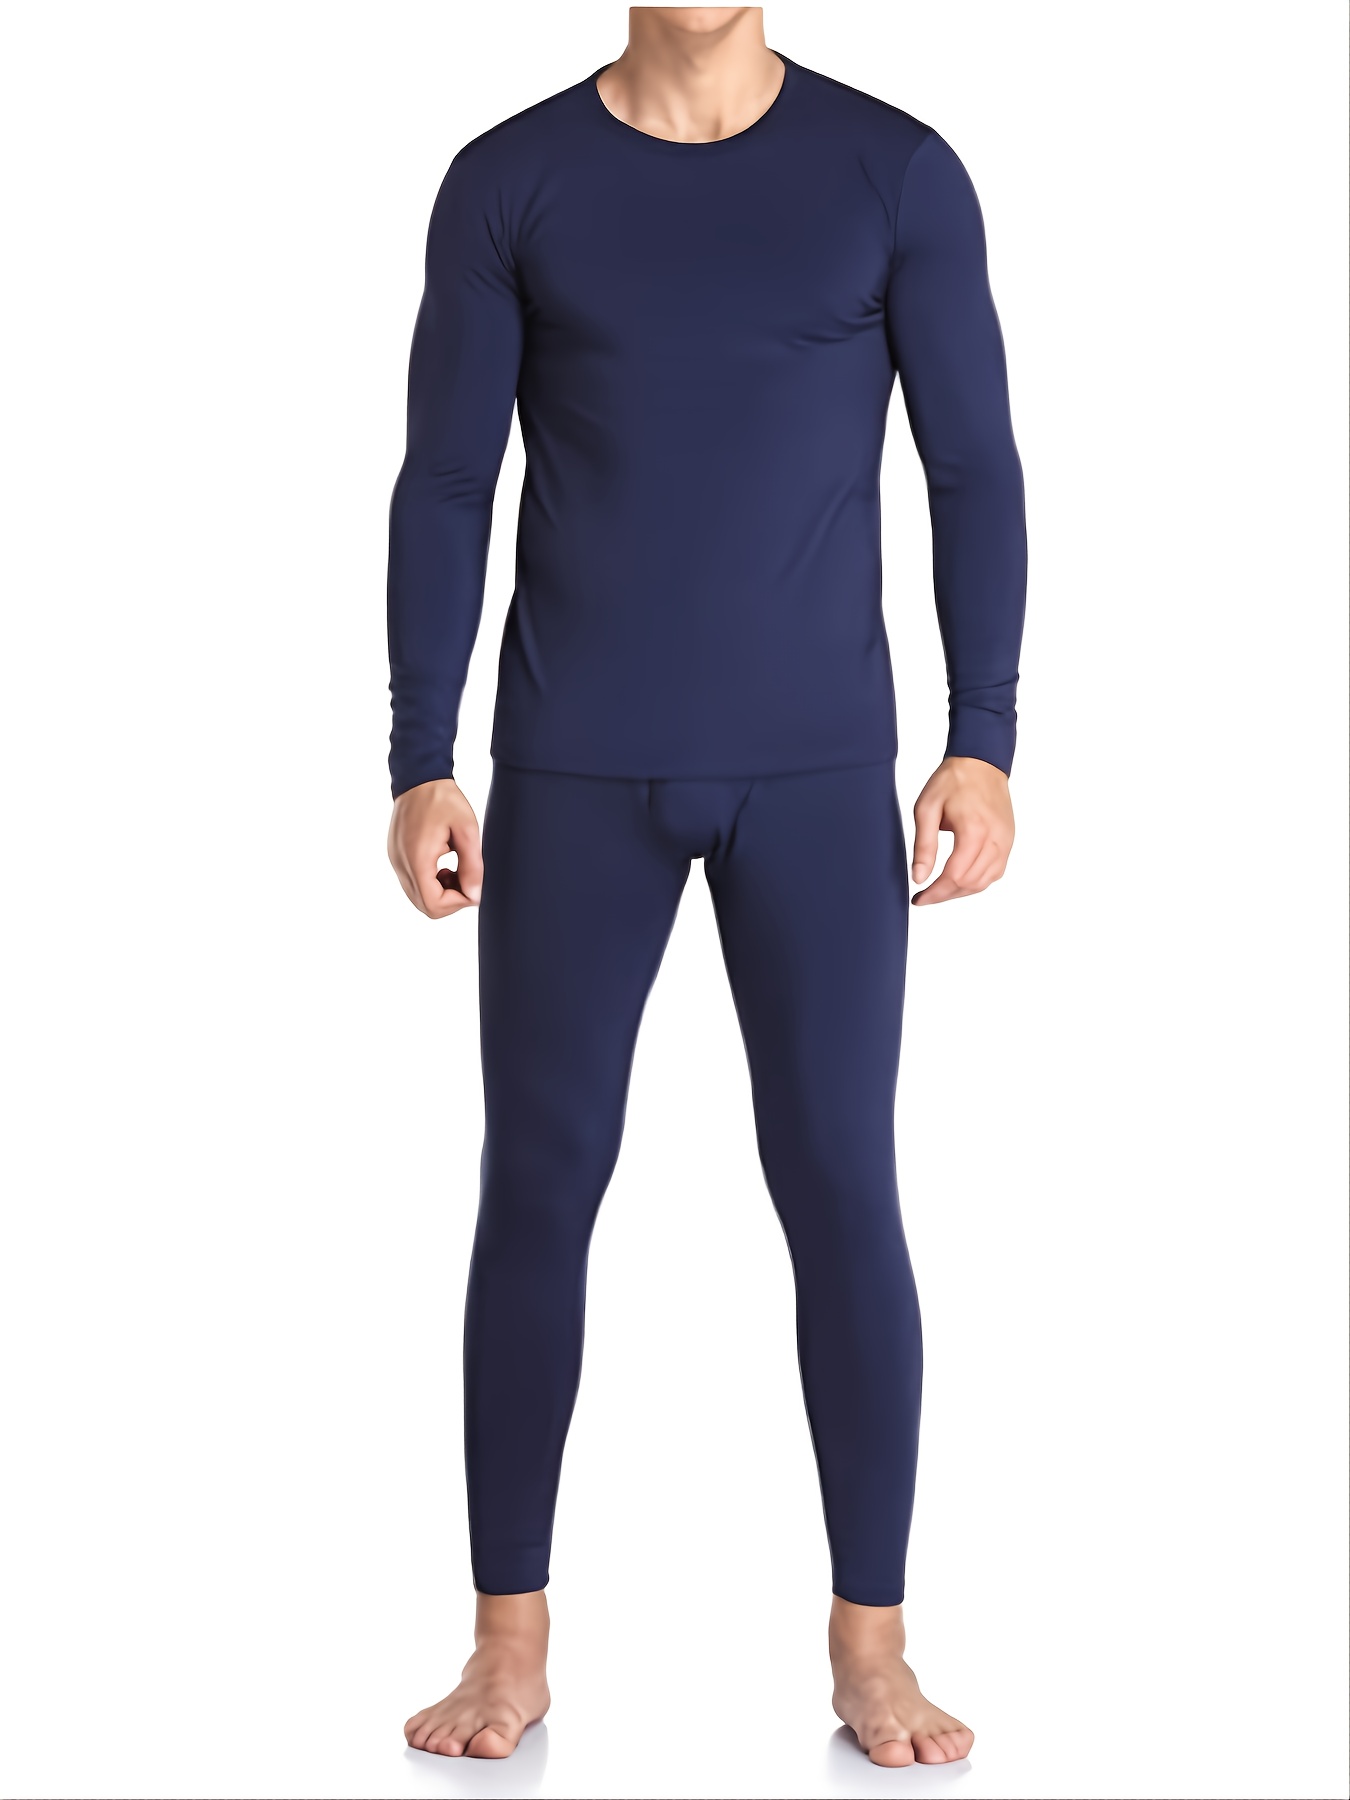 2022 Winter Thermal Underwear Men Long Thermal Suit Warm Tops +